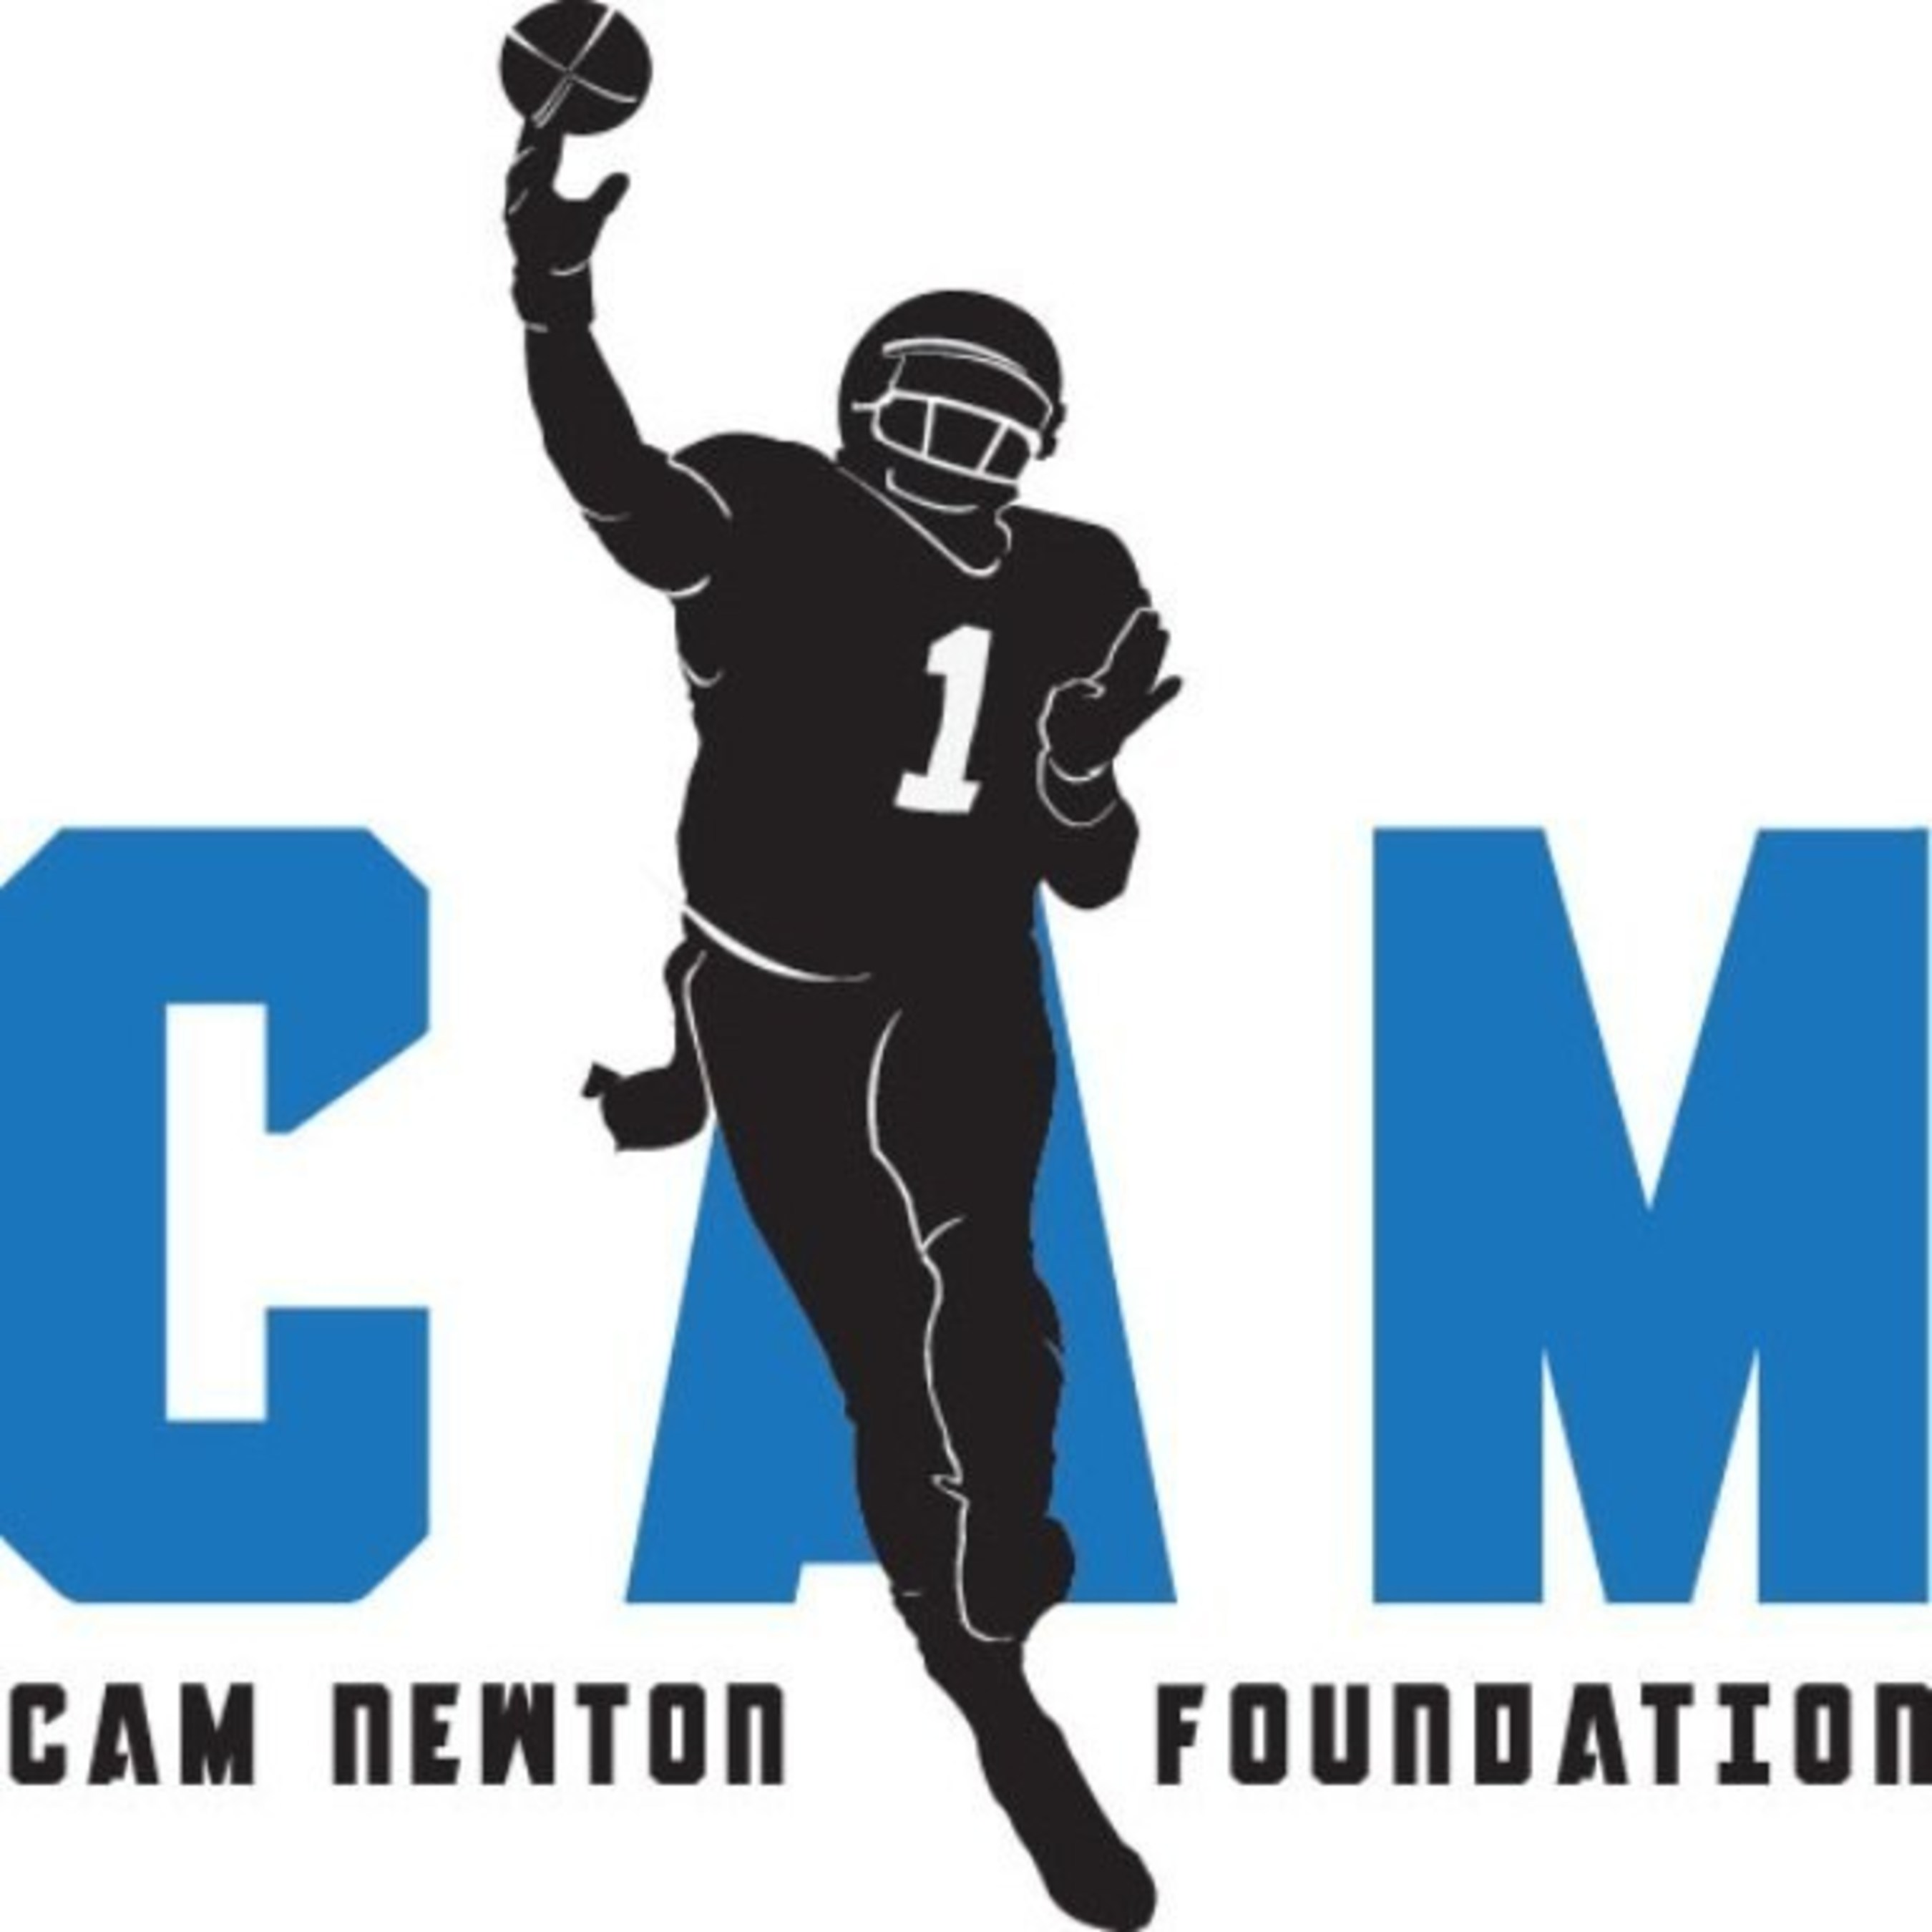 Cam Newton Foundation Logo